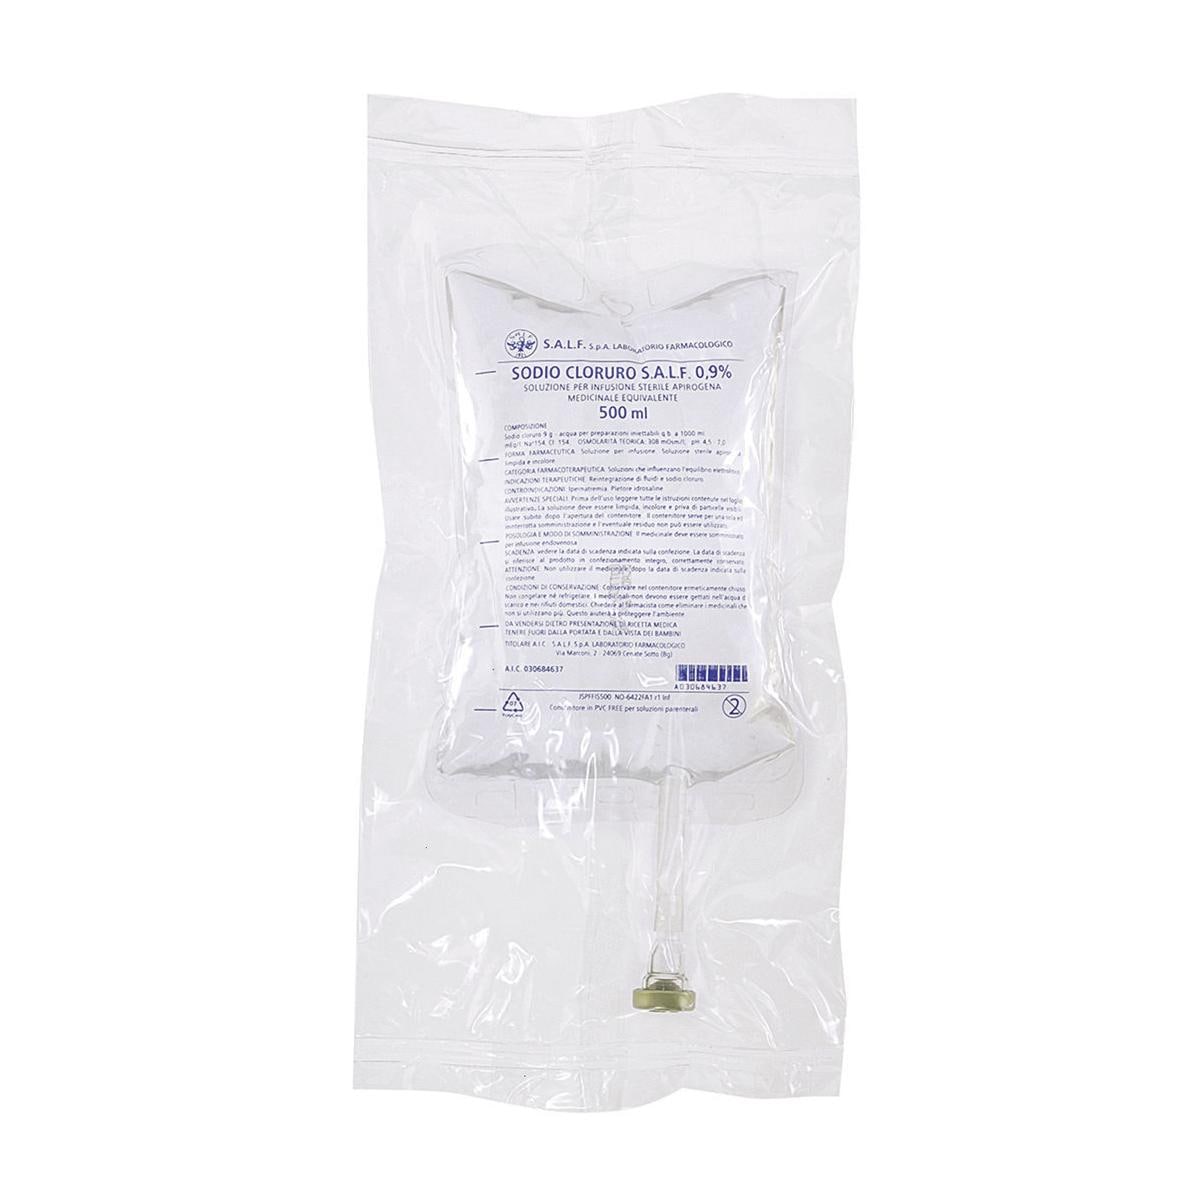 SODIO CLORURO 0,9% in sacche PVC FREE - Cartone da 20 sacche da 250 ml cad. (A.I.C. 030684702)